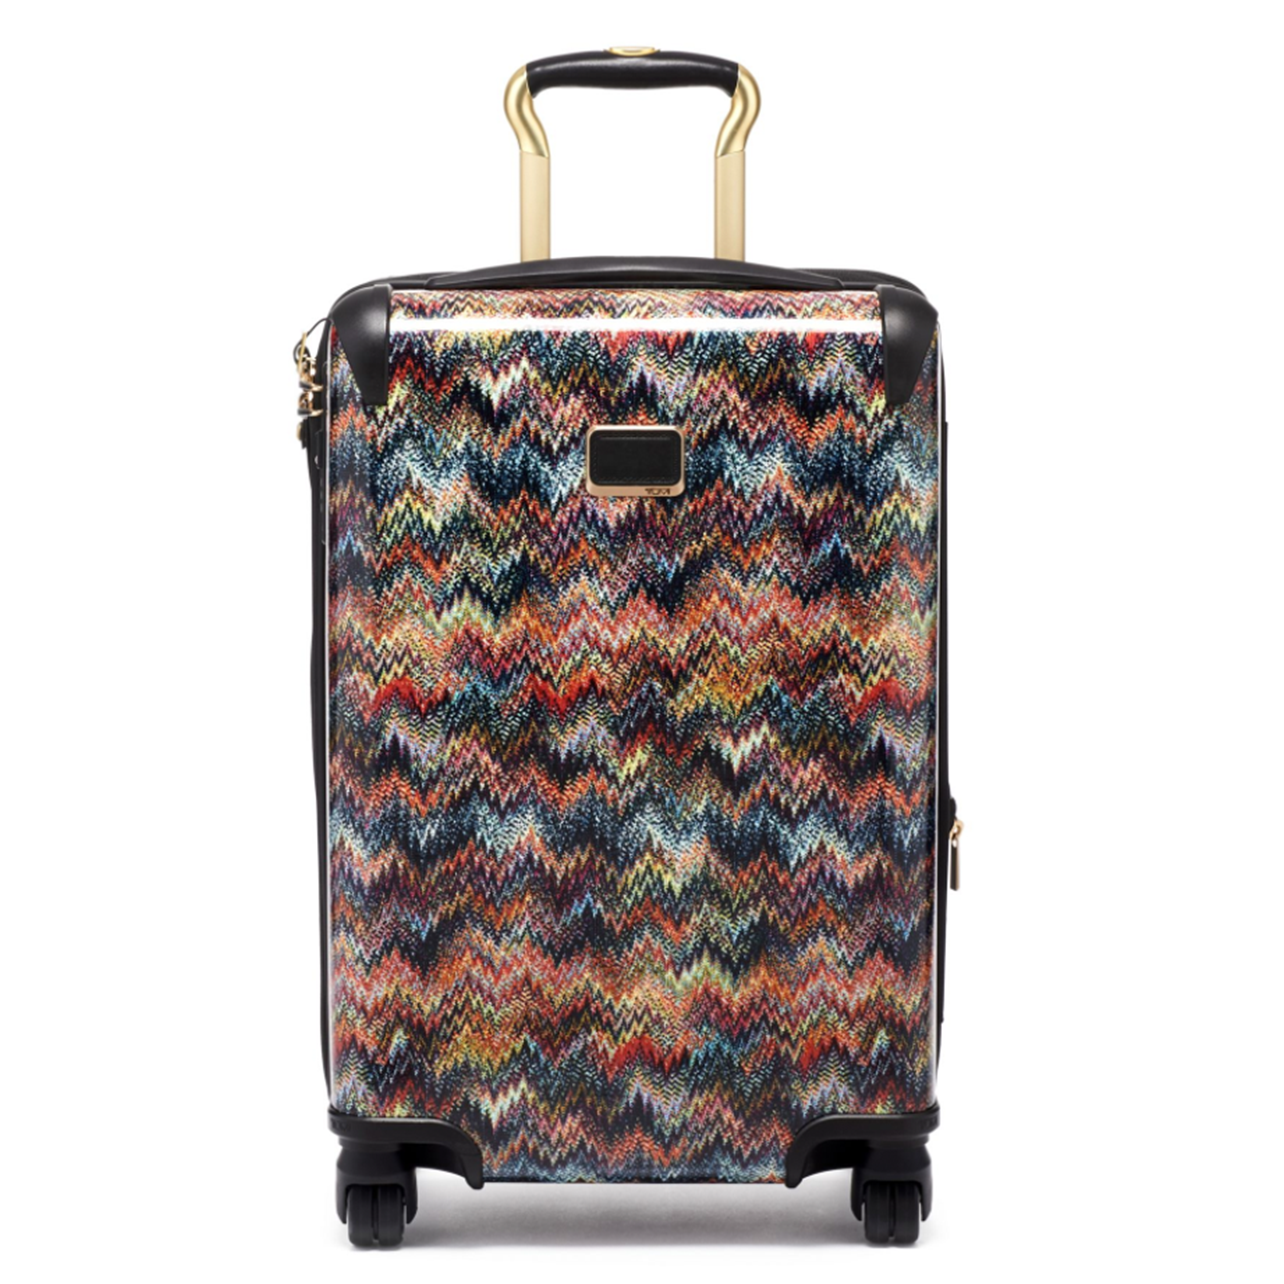 Missoni carry-on luggage